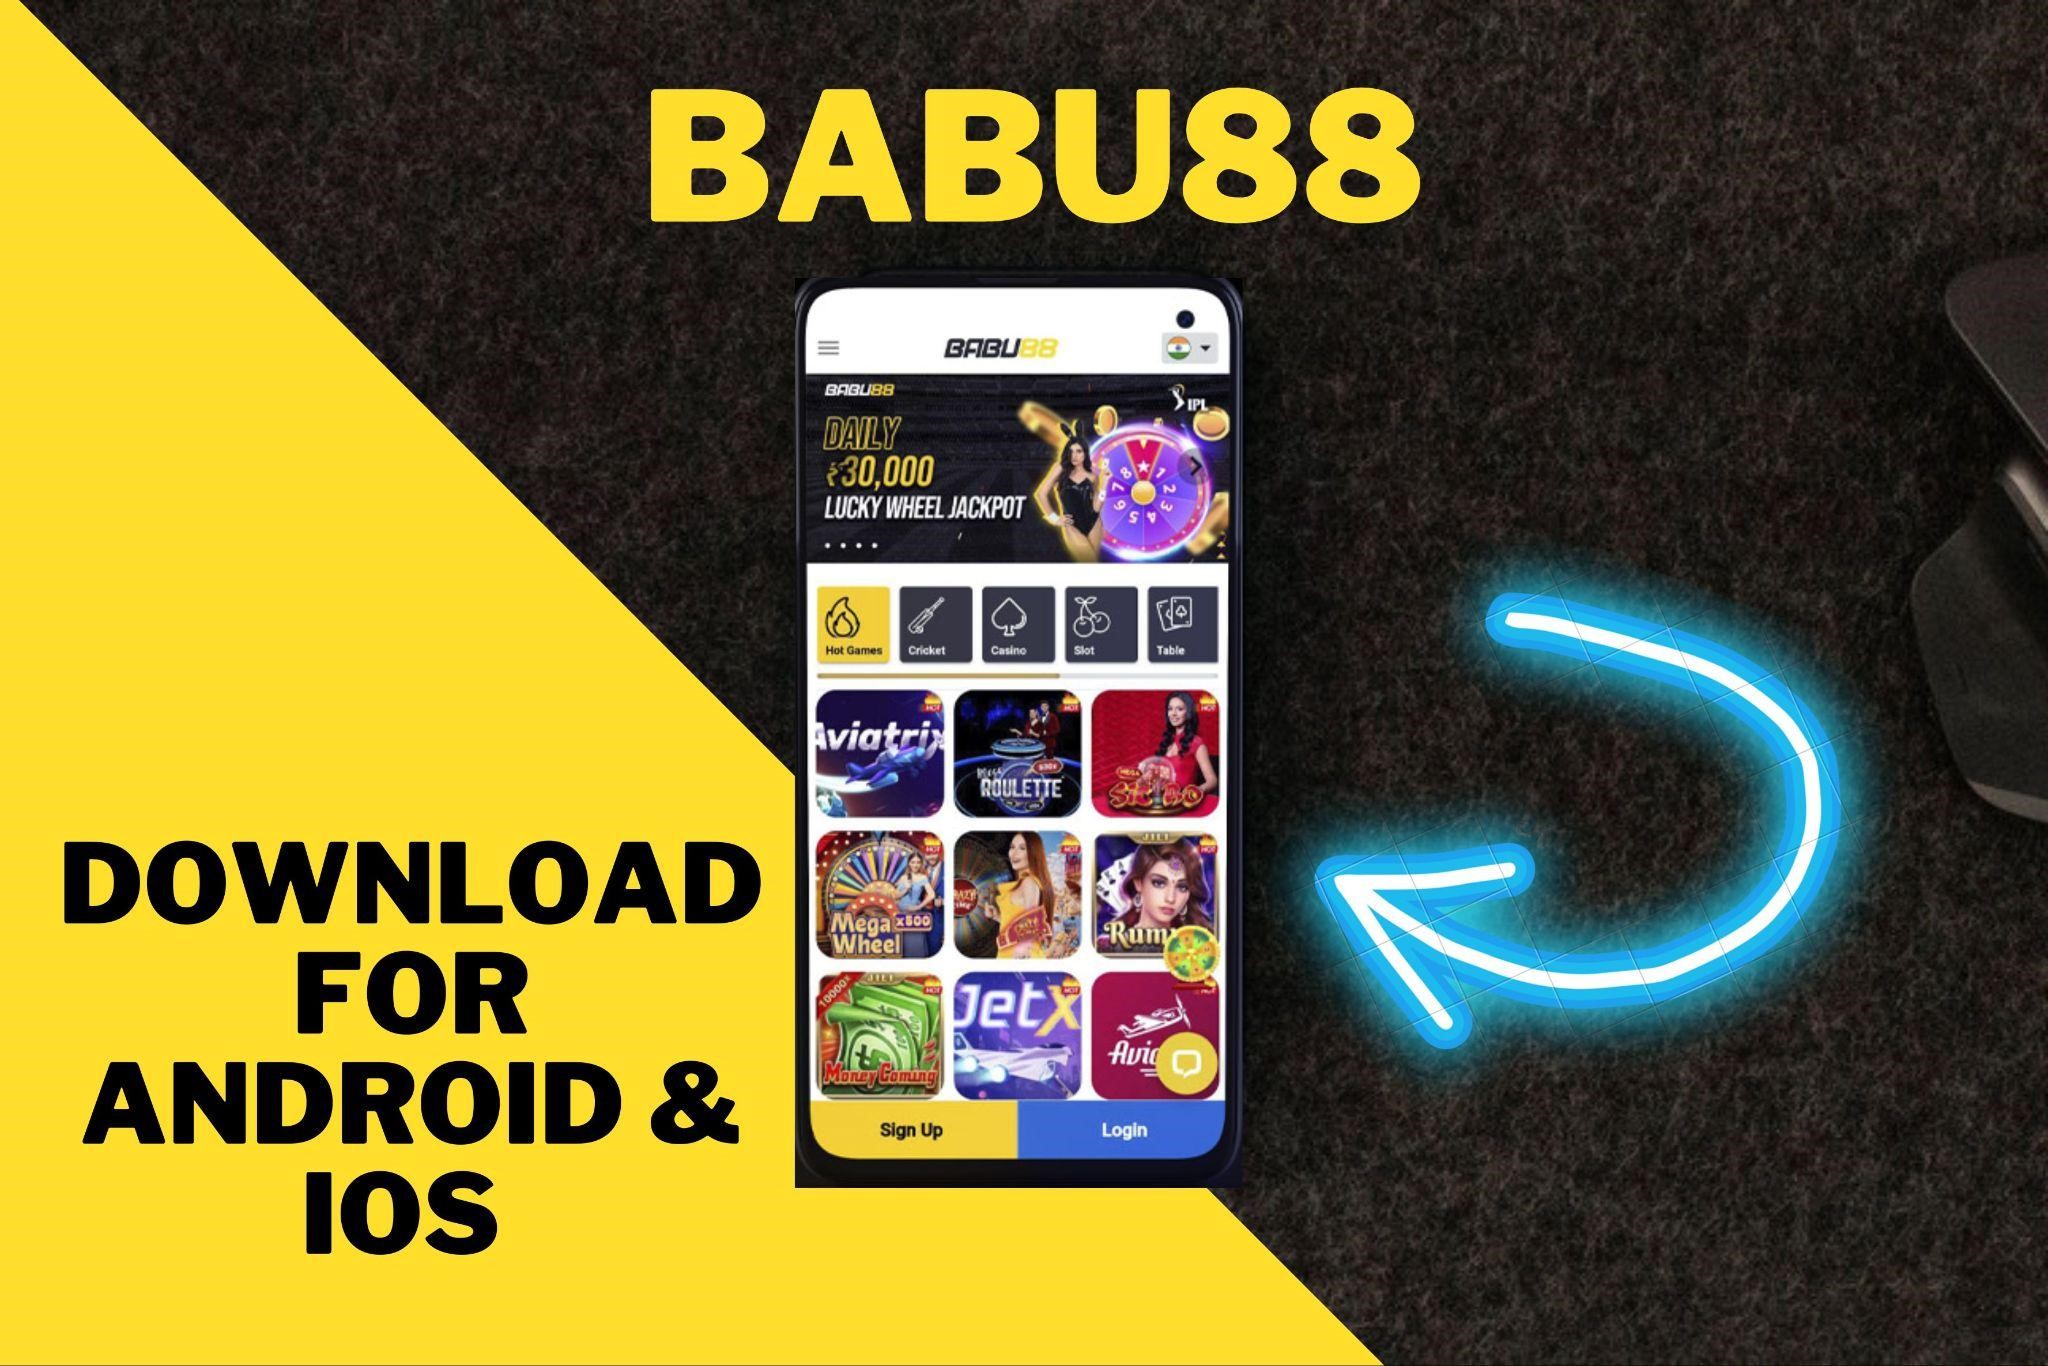 Benefits of Babu88 App Download